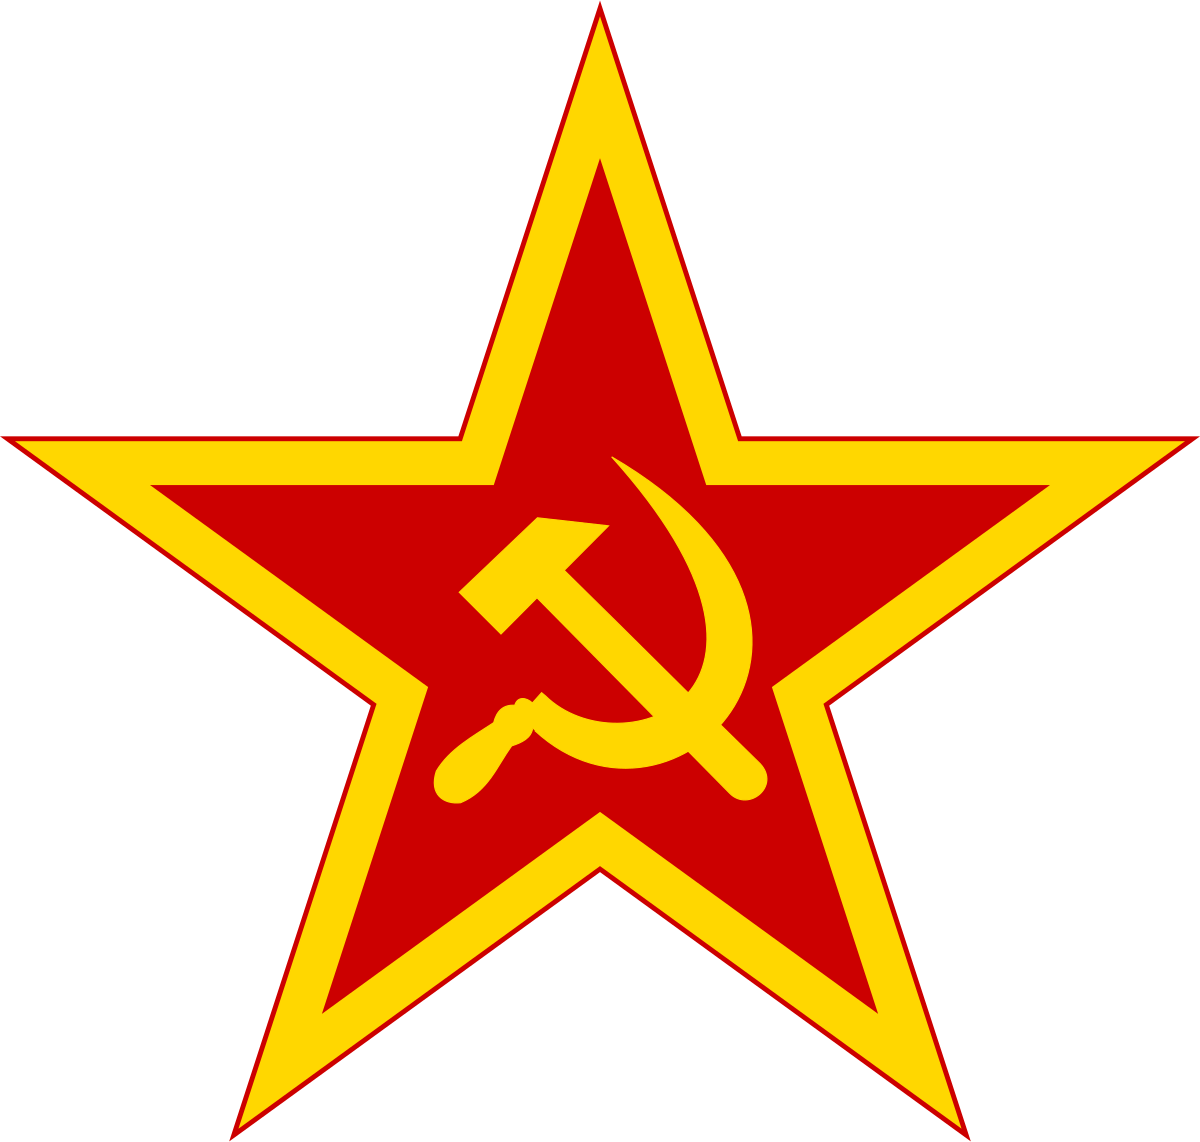 Red Fist Logo - Communist symbolism